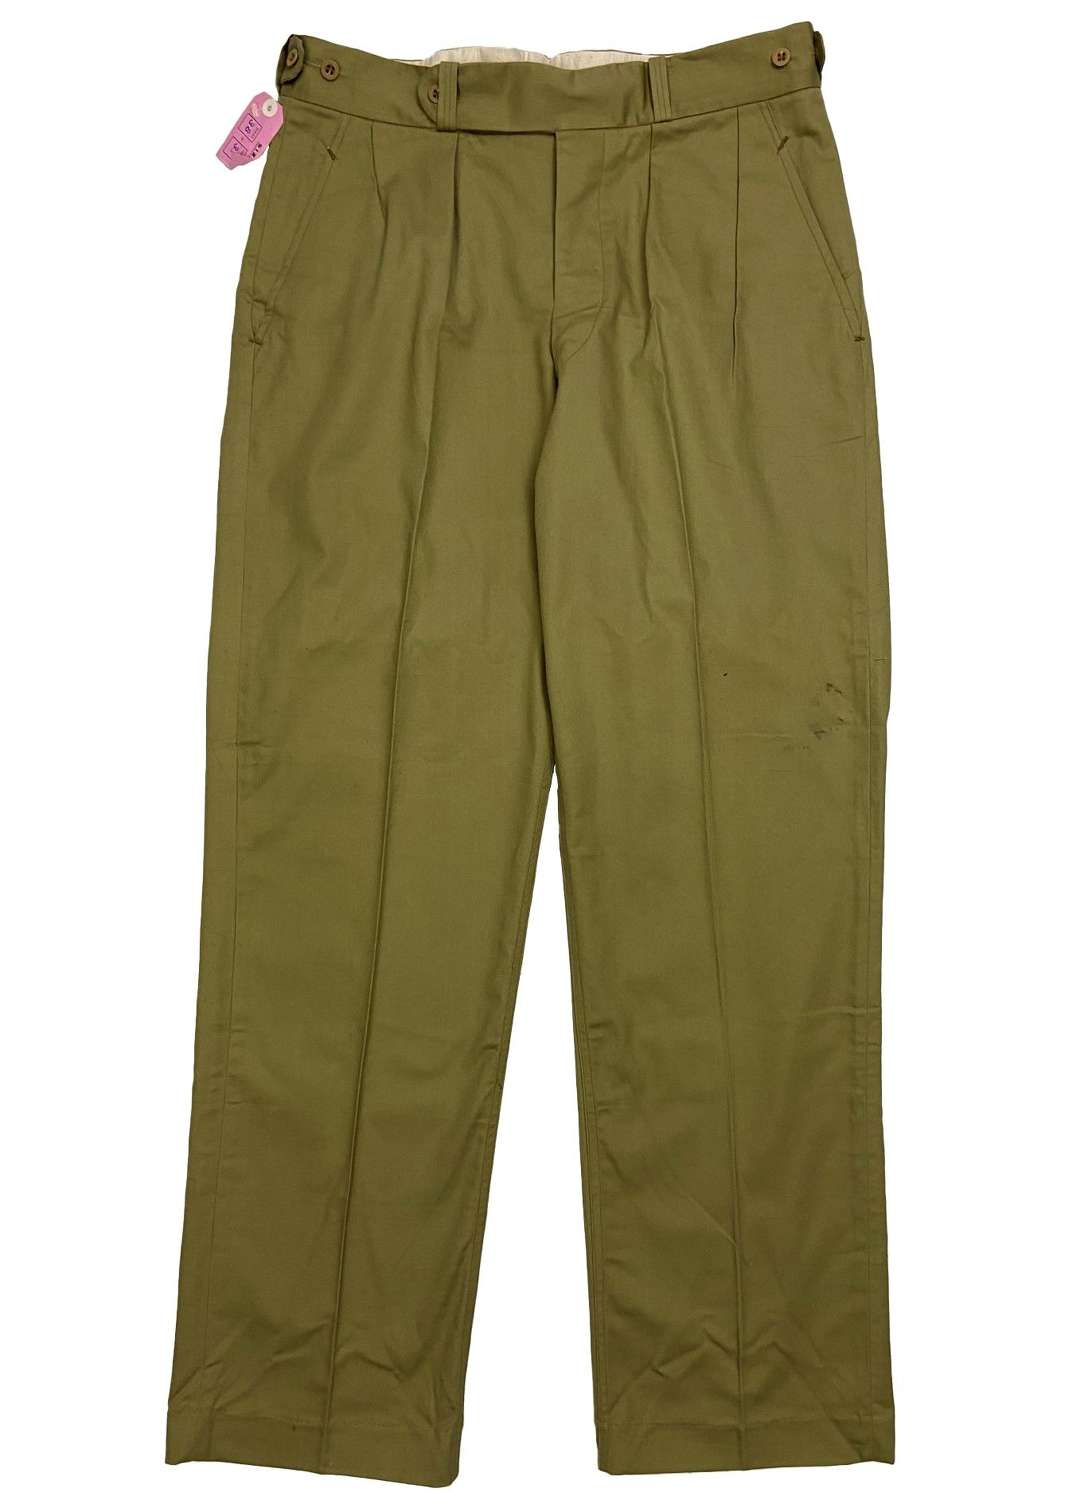 Original 1960s British Cotton Drill Trousers - Size 38x33